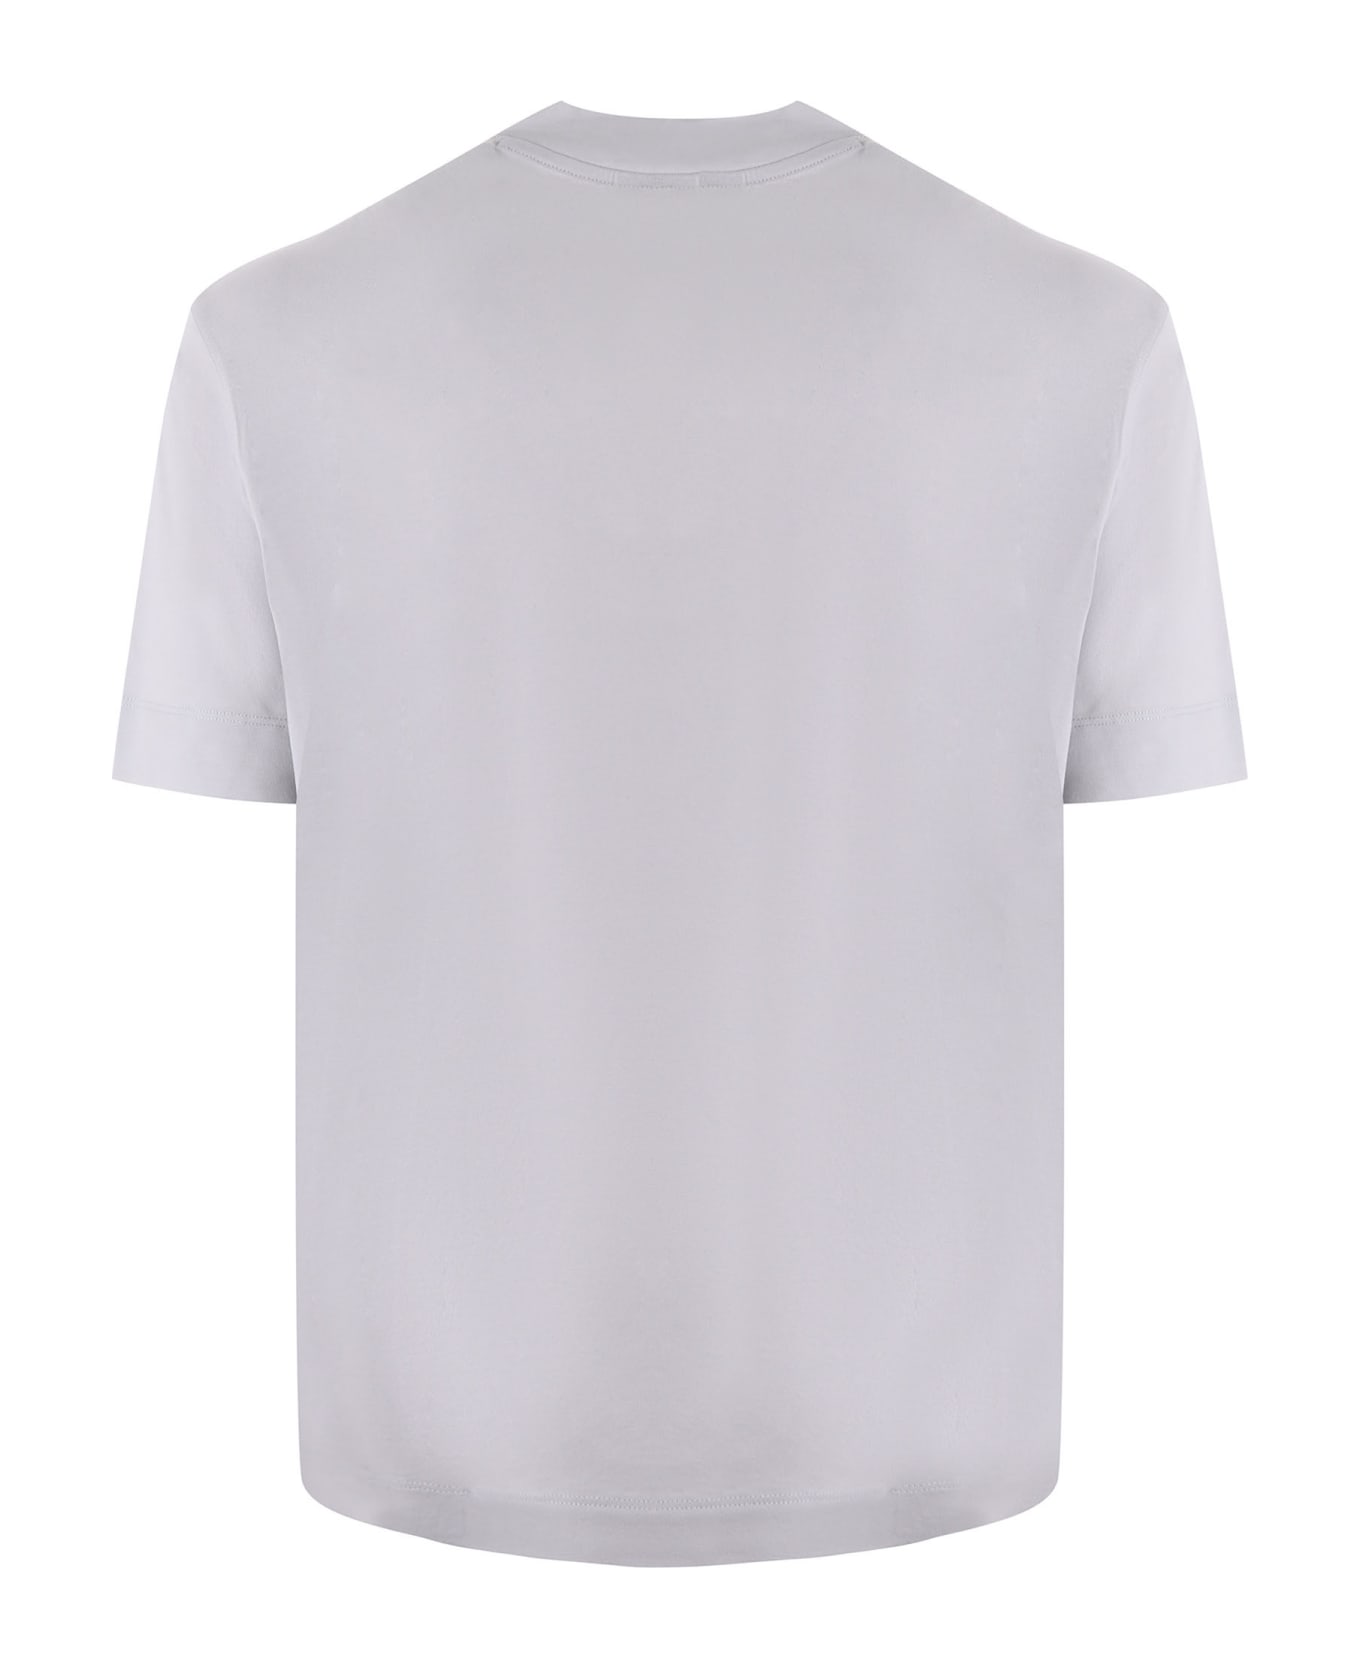 Emporio Armani T-shirt - Grigio perla シャツ